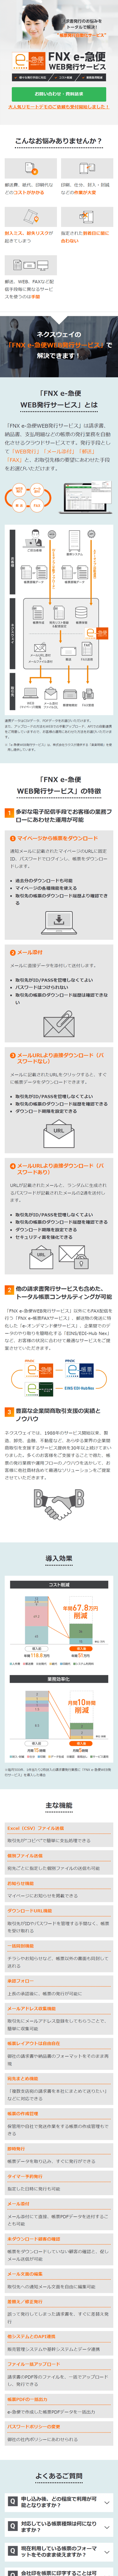 FNX e-急便WEB発行サービス_sp_1